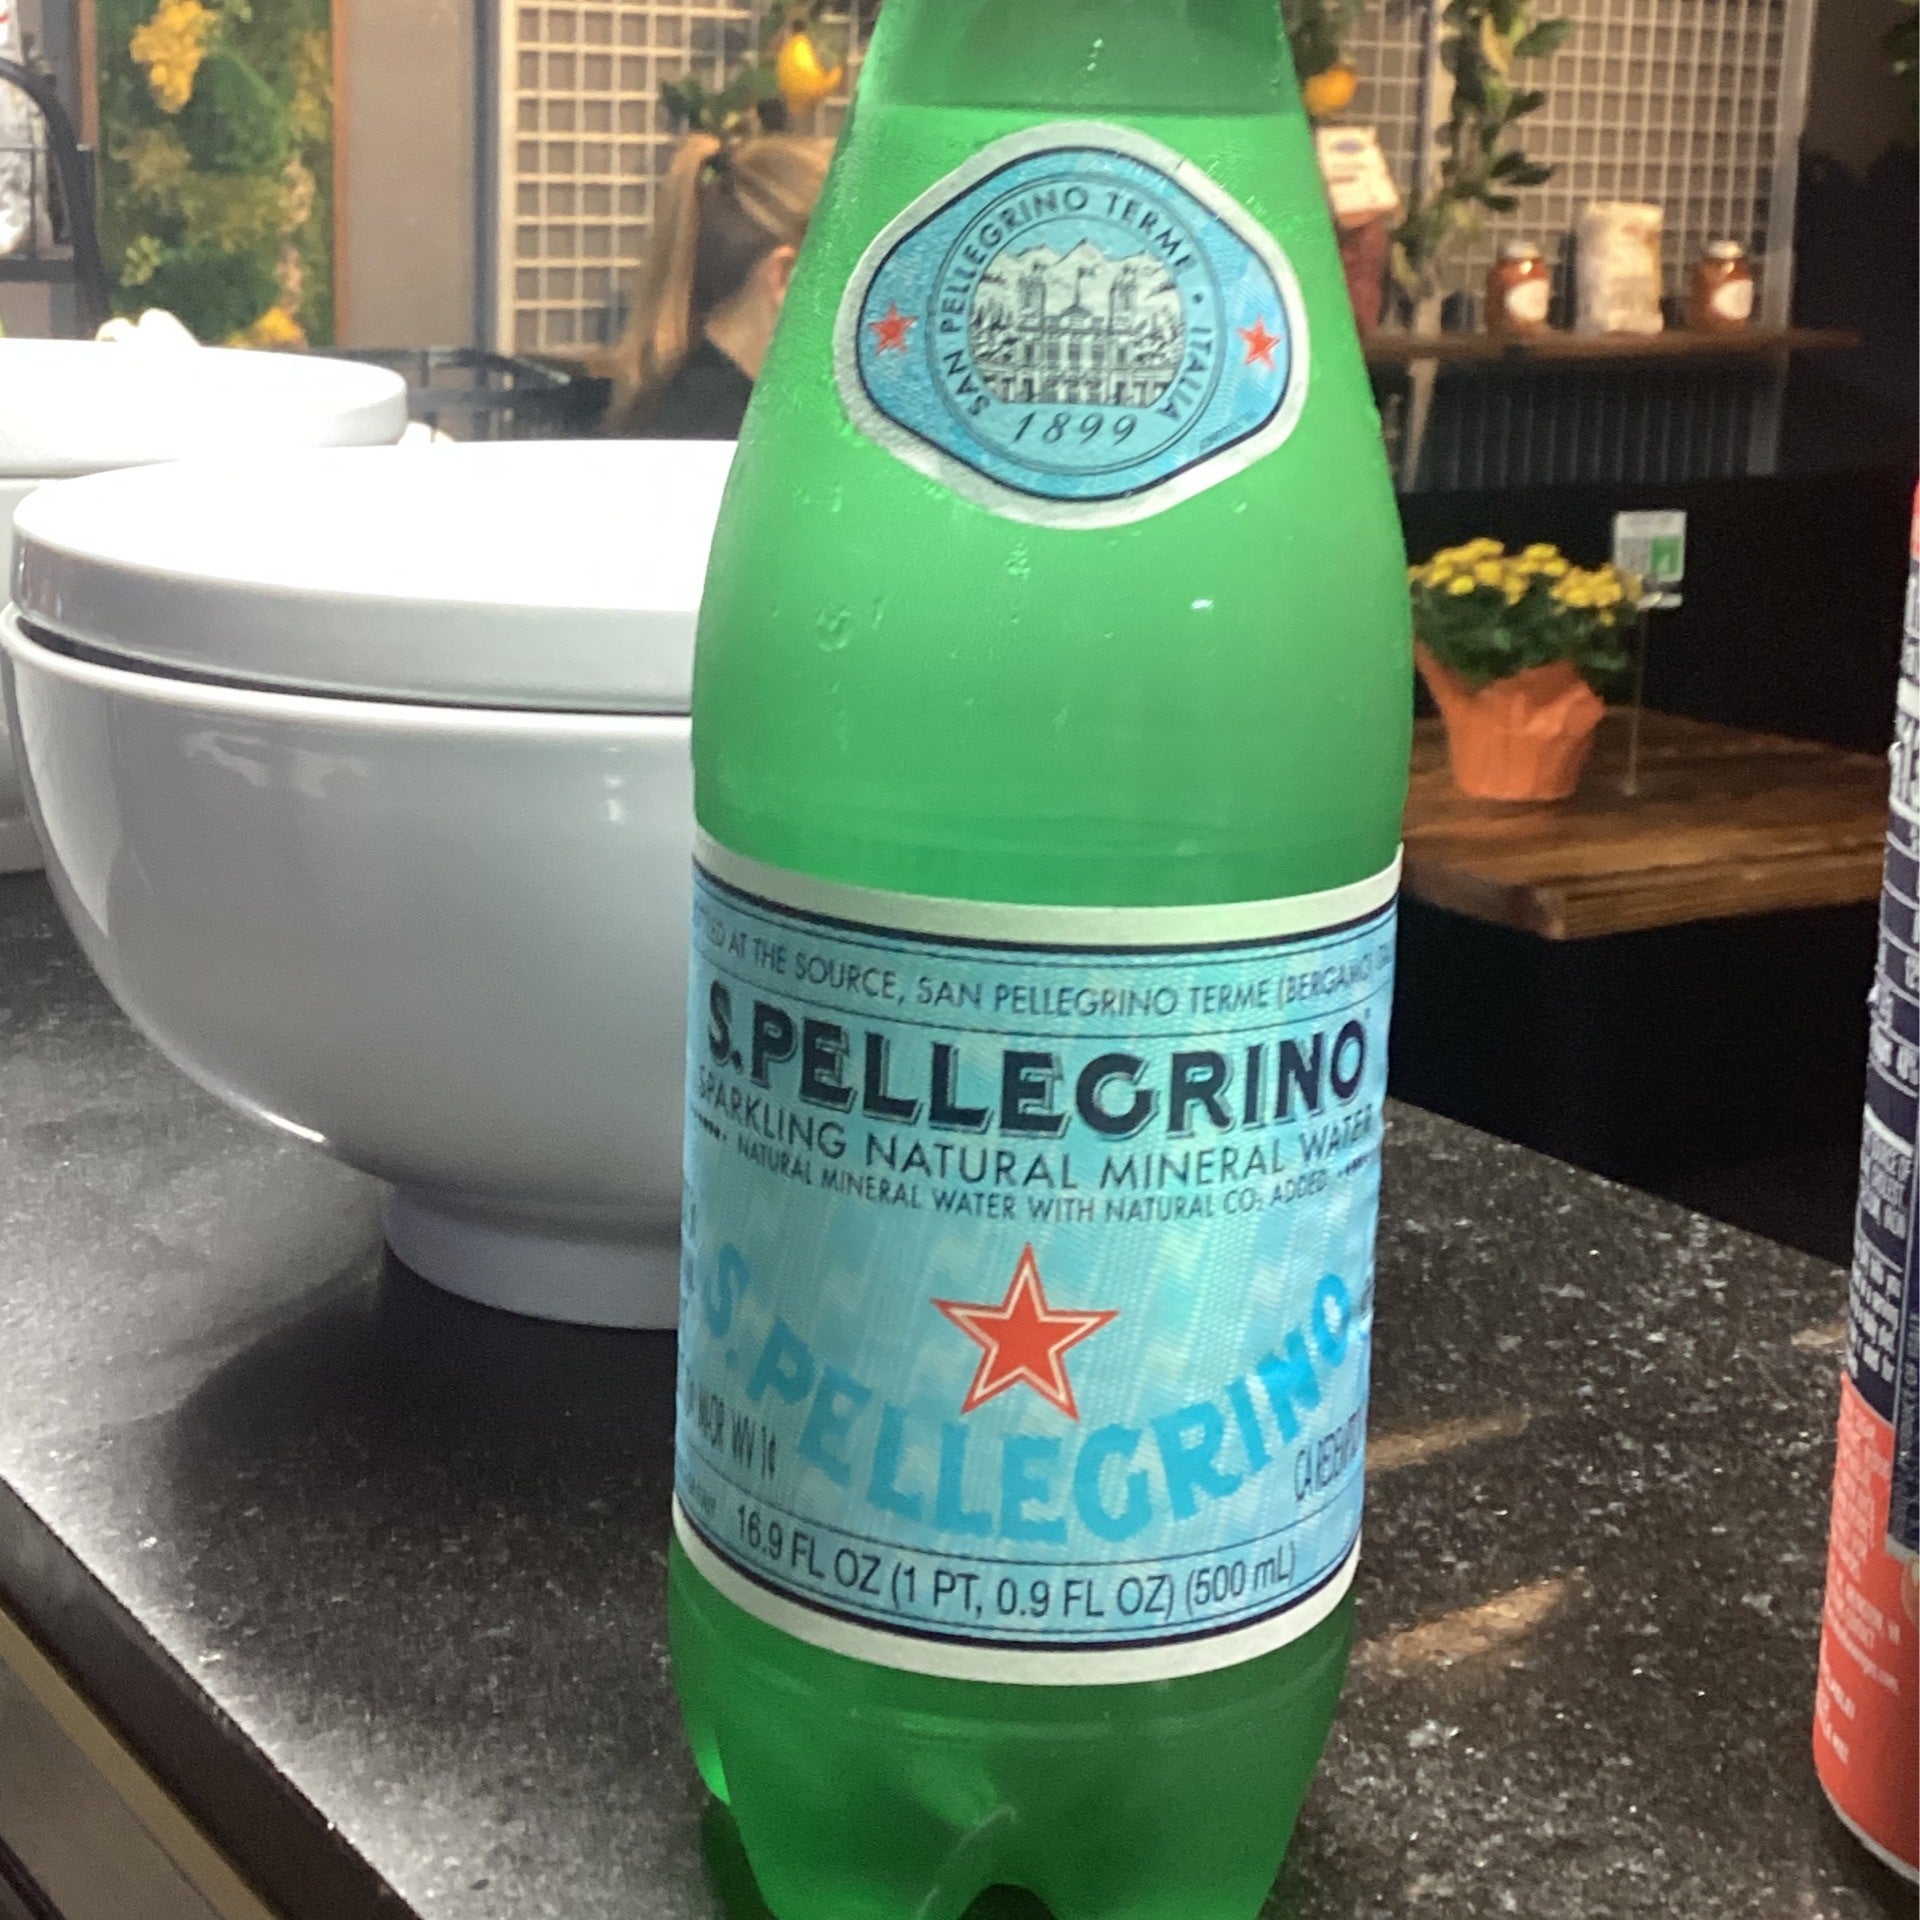 S. Pellegrino Sparkling Natural Mineral Water, 16.9 fl oz